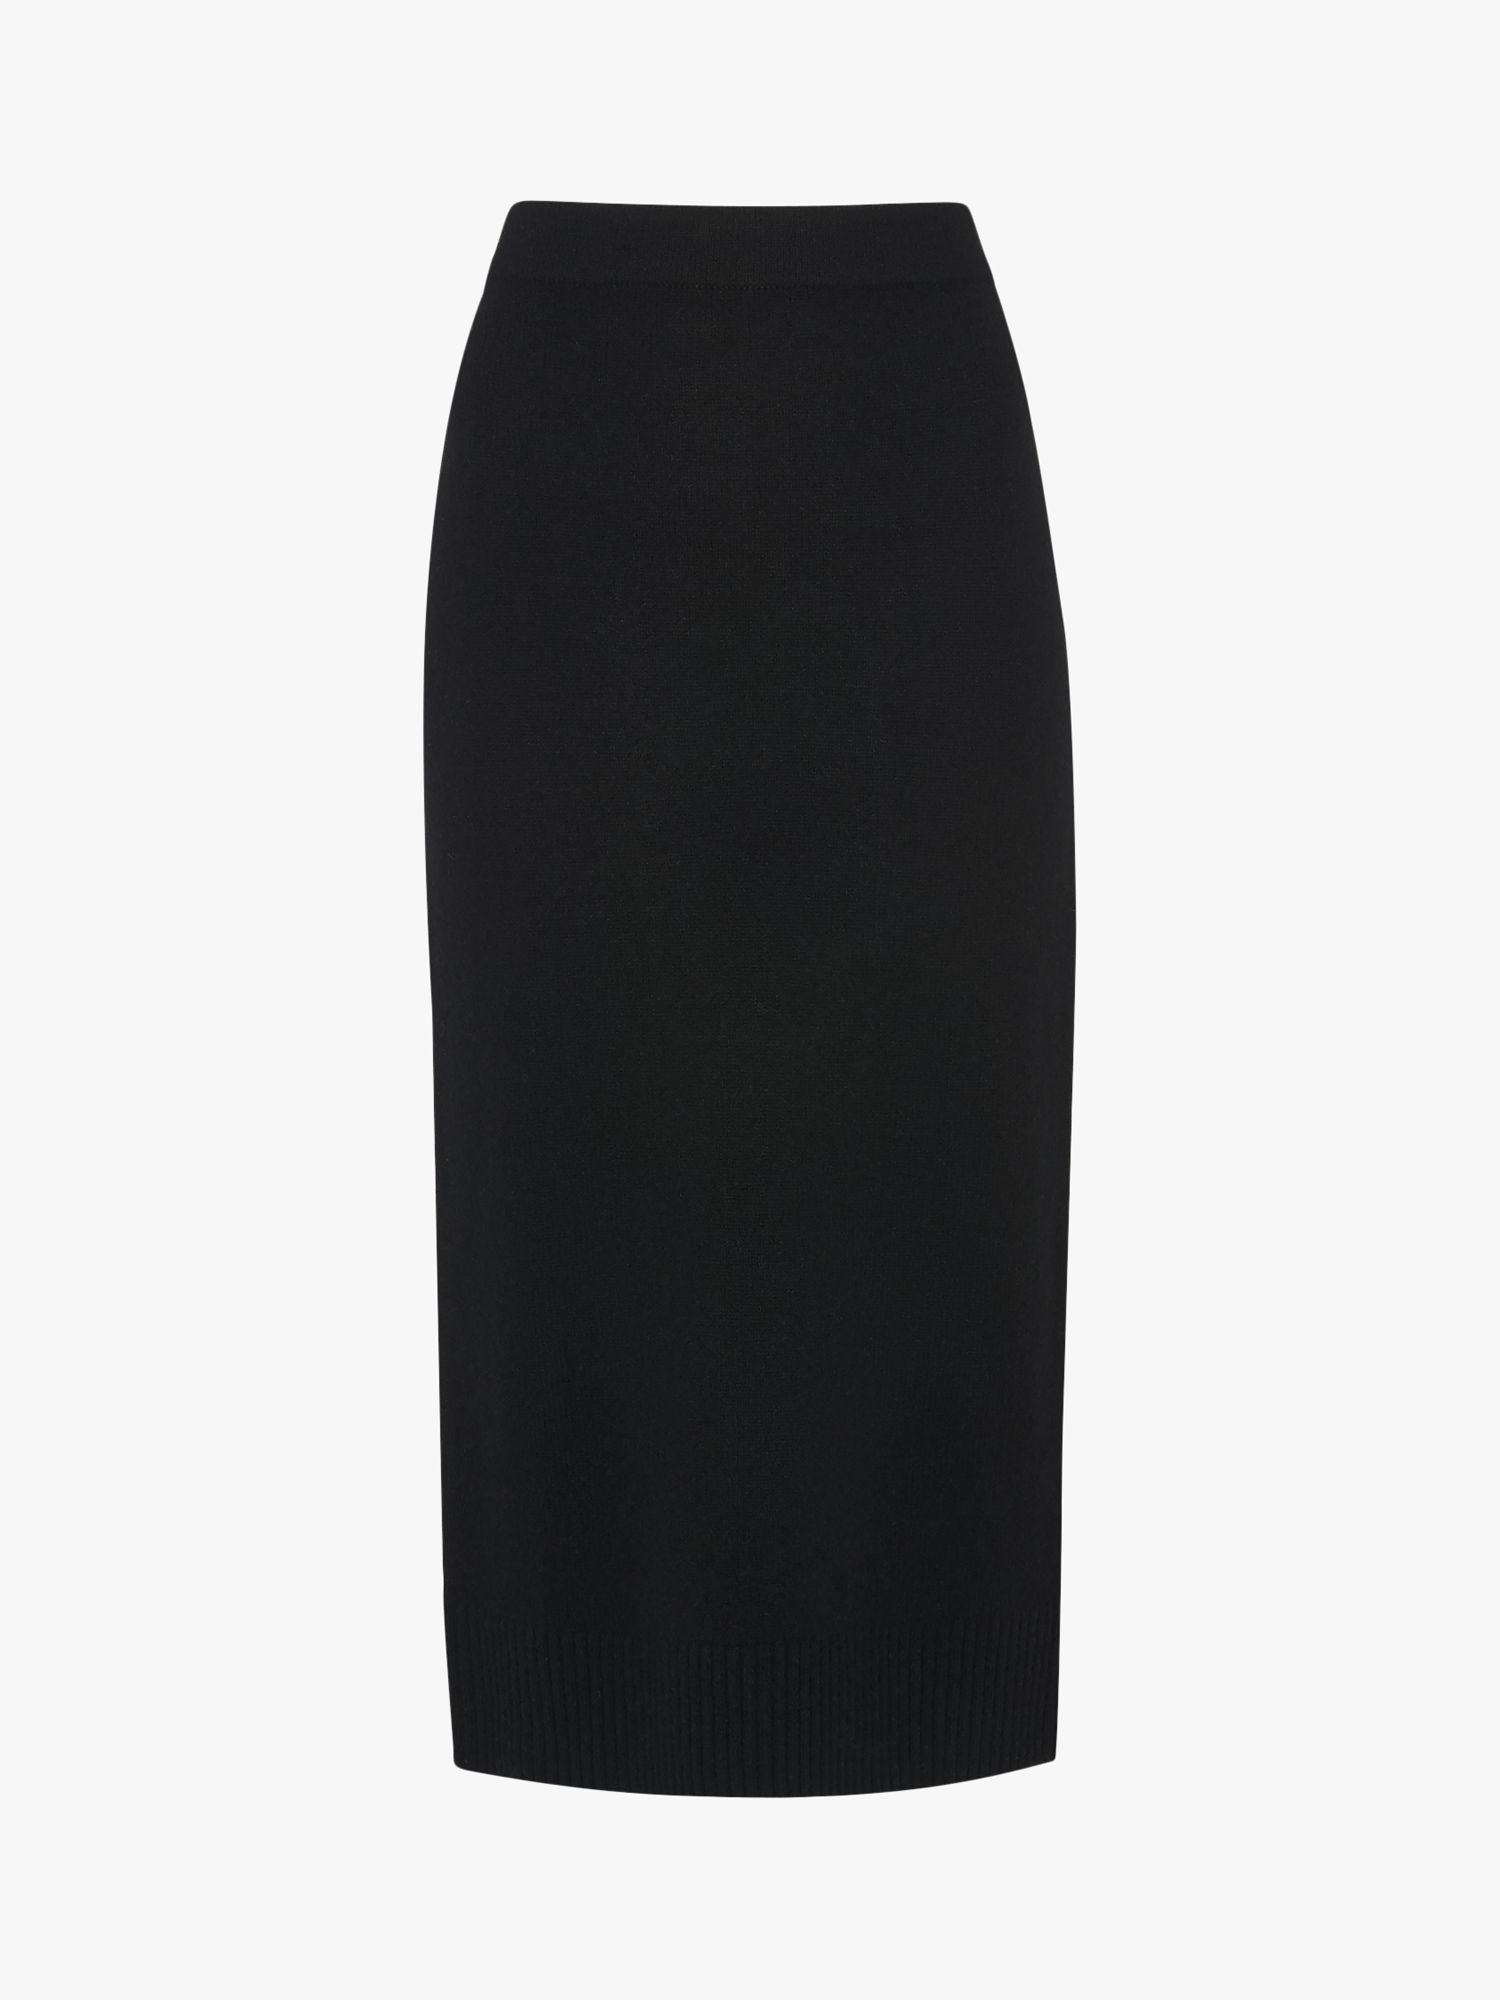 Whistles Knitted Merino Wool Midi Skirt, Black at John Lewis & Partners